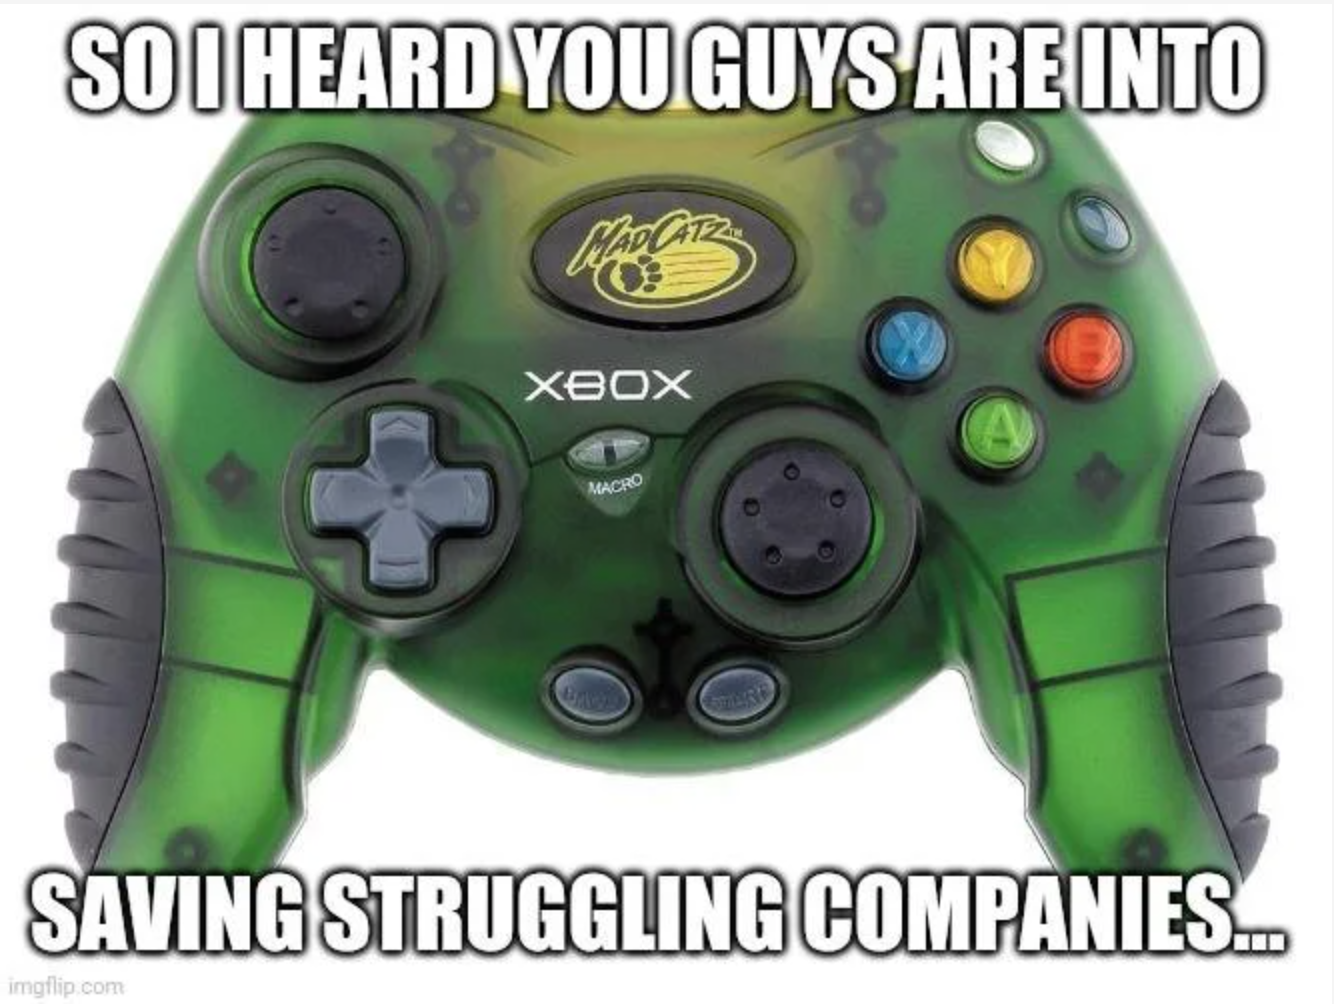 mad catz meme - So I Heard You Guys Are Into Wap Cate Xbox Macro Saving Struggling Companies... imgflip.com